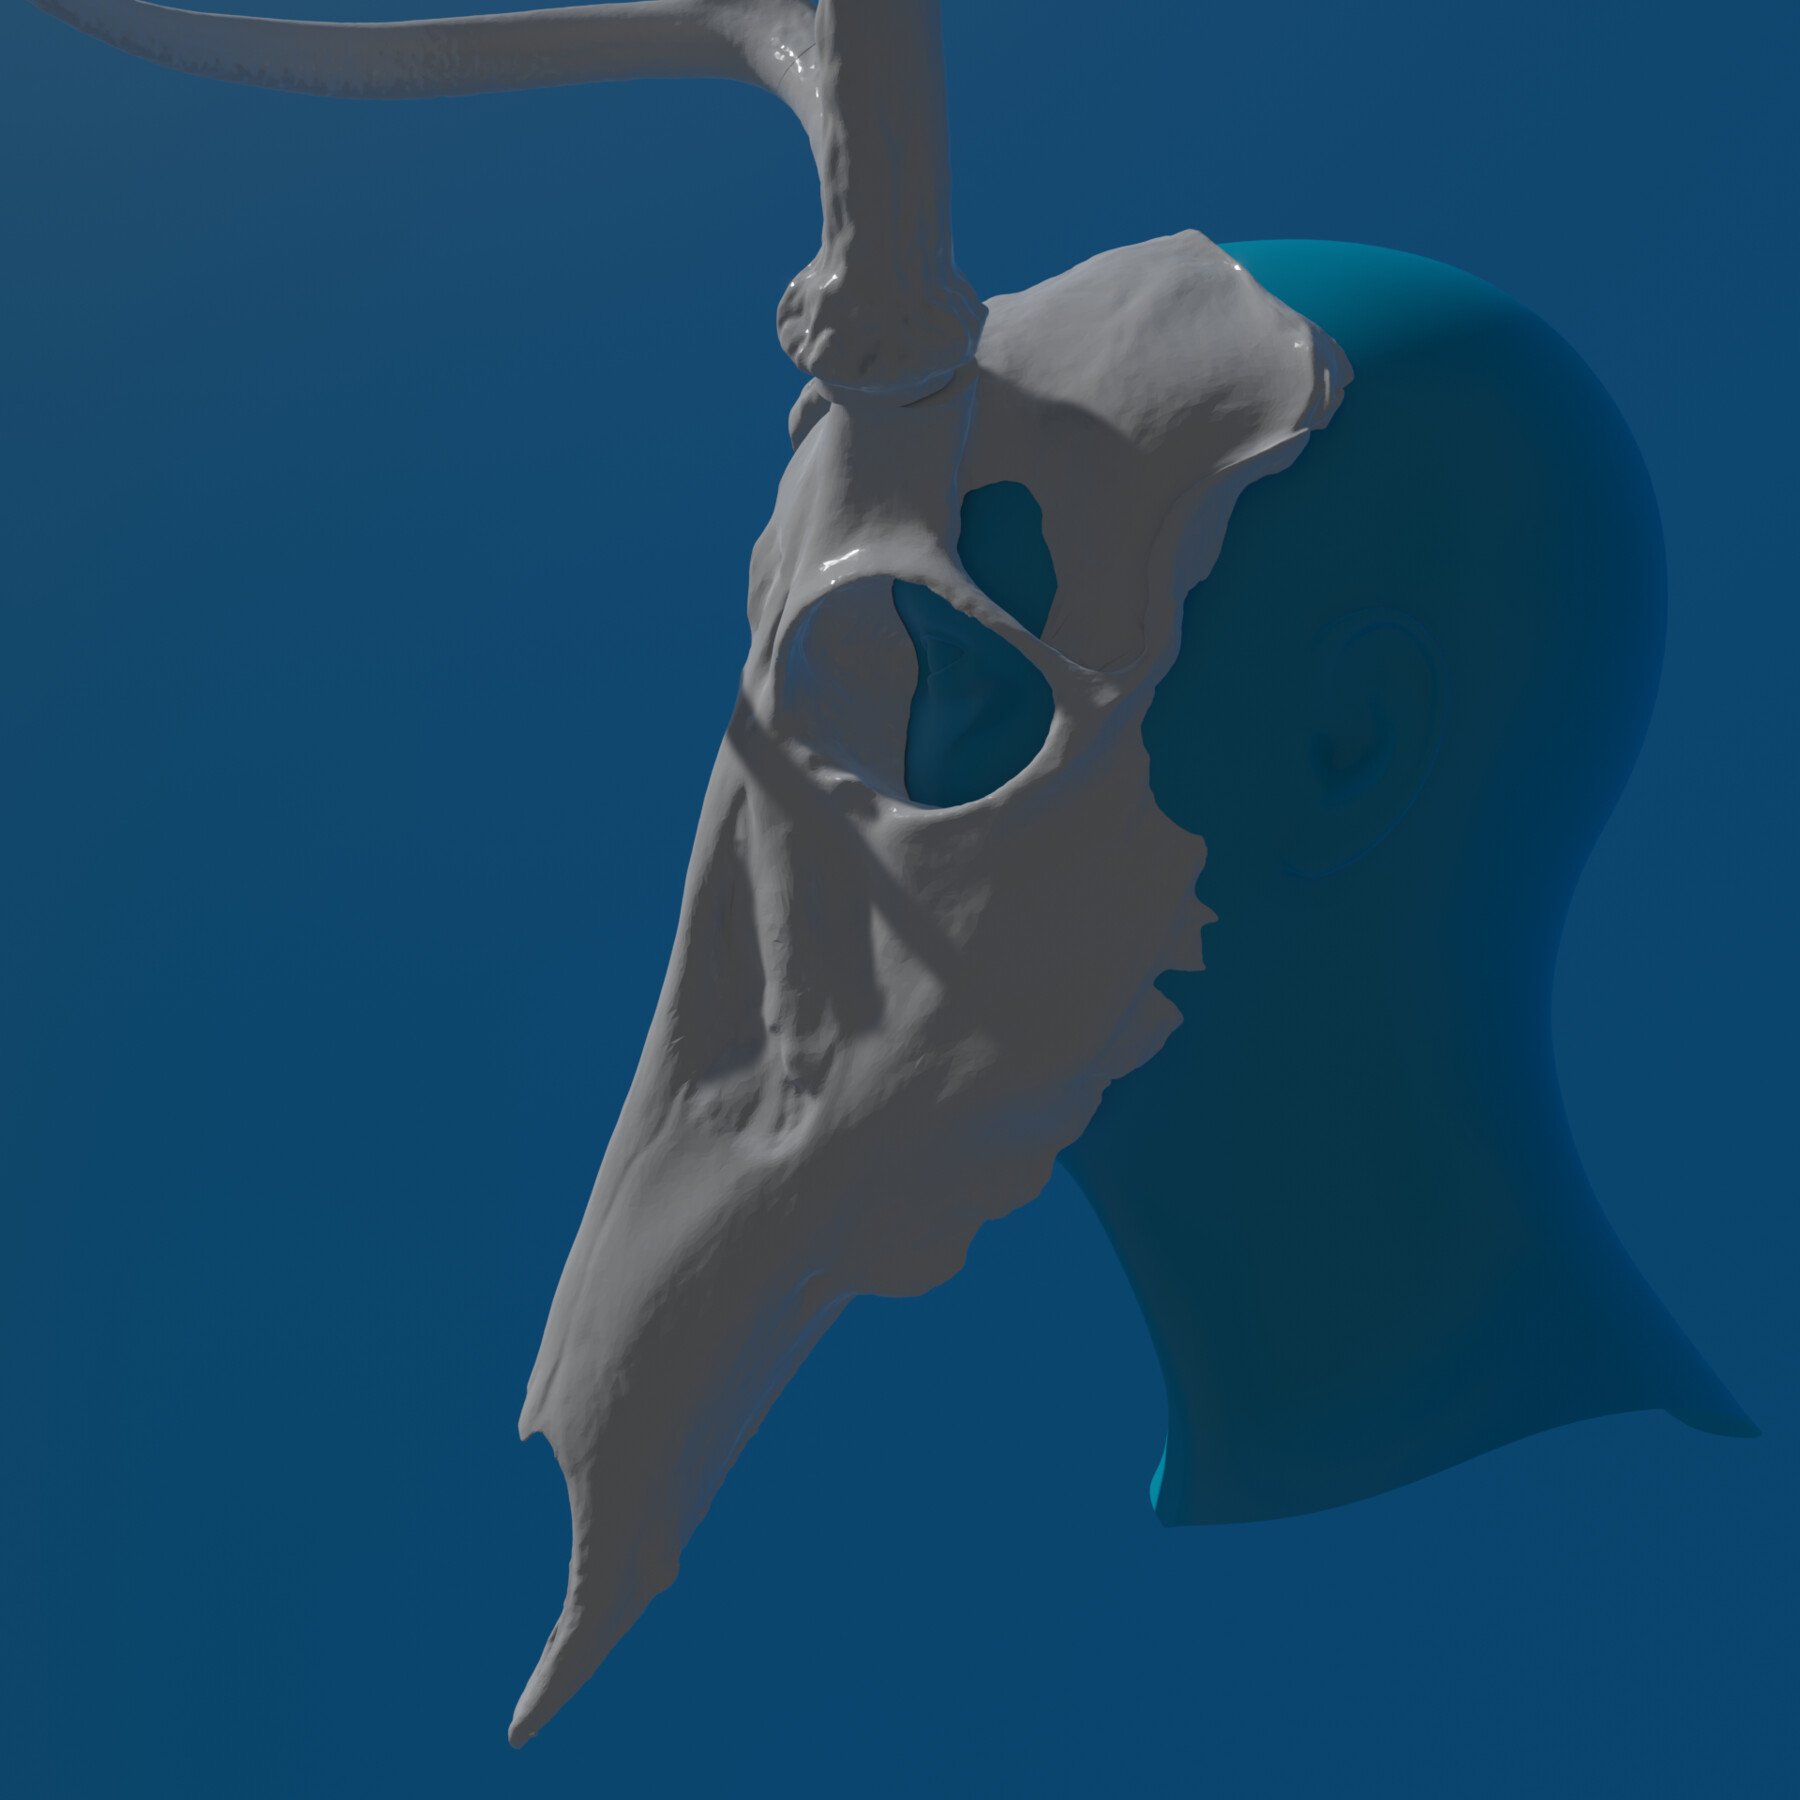 Cultist Deer Skull Mask cs go skin for ios download free